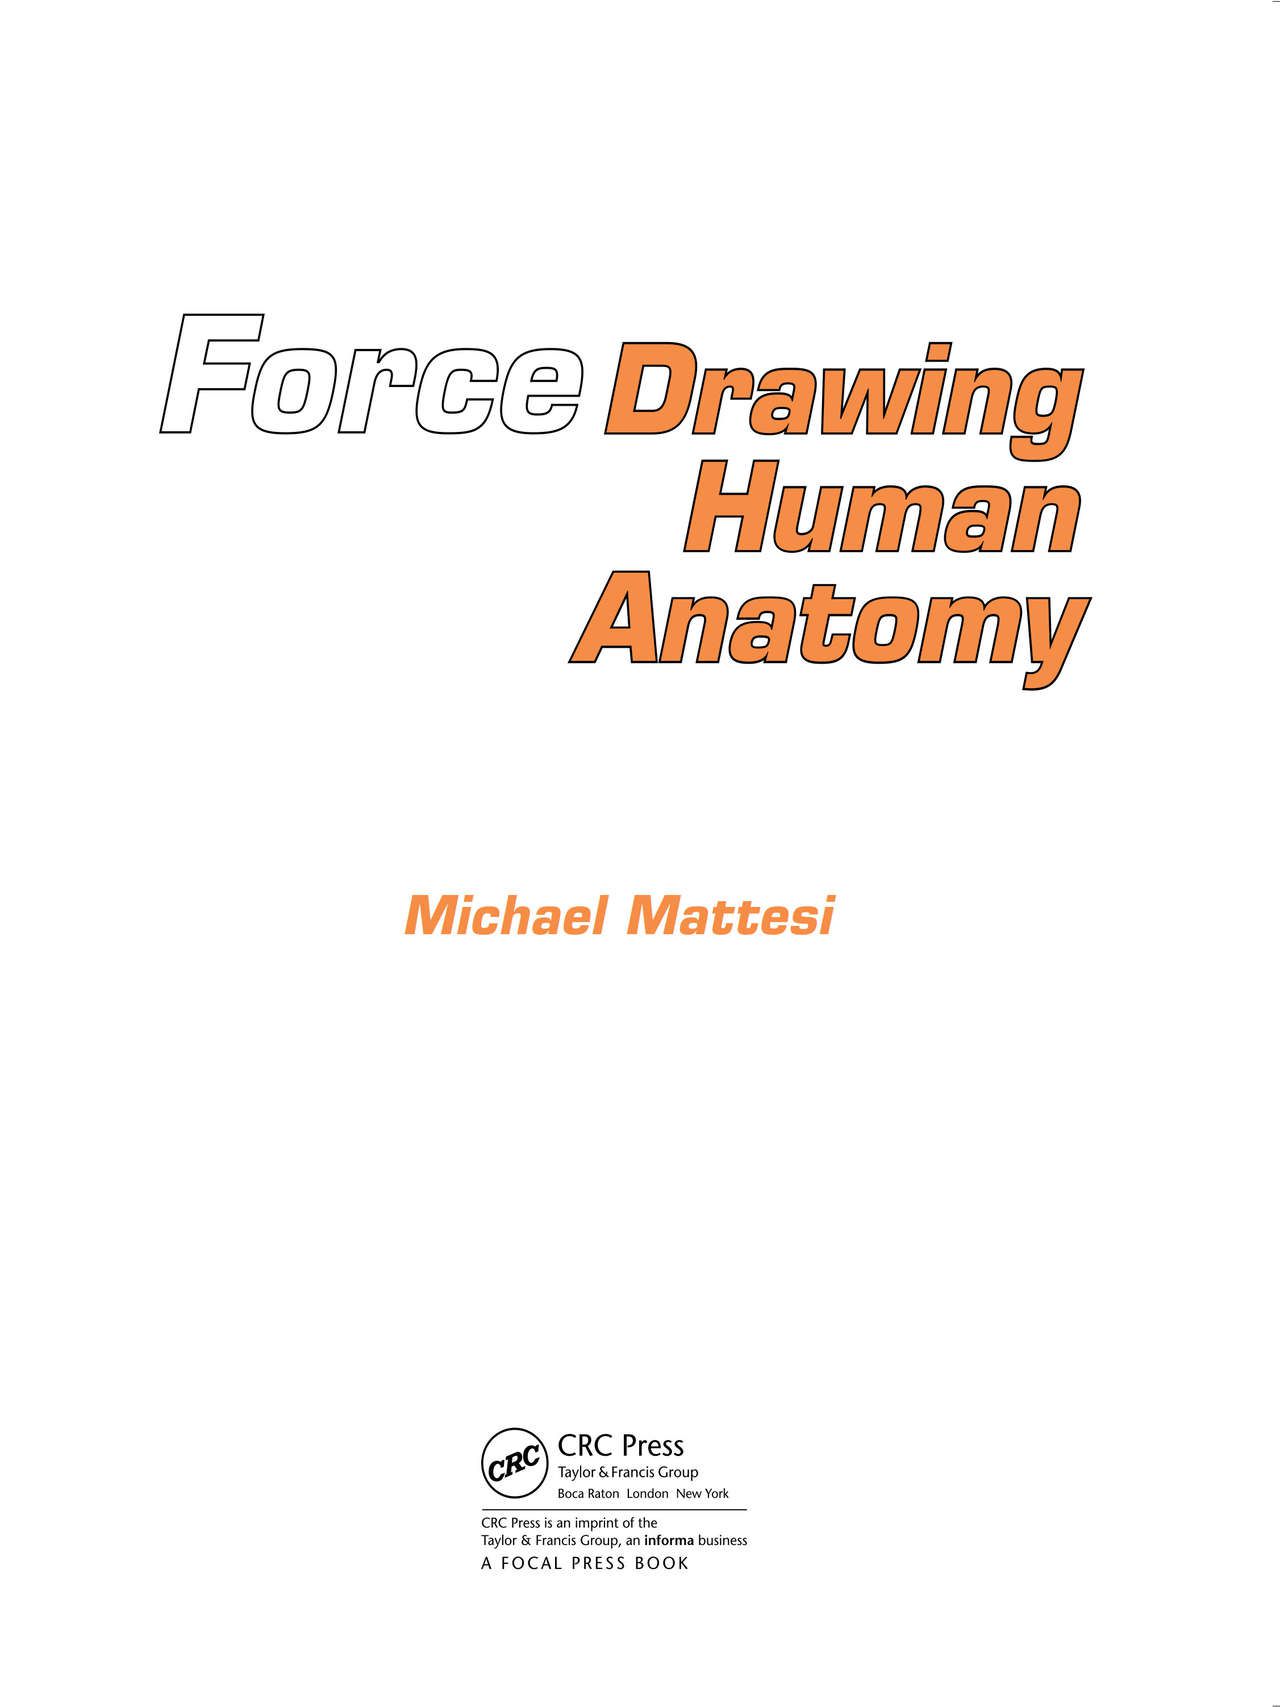 Force. Drawing human anatomy - Michael D. Mattesi [Digital] 3